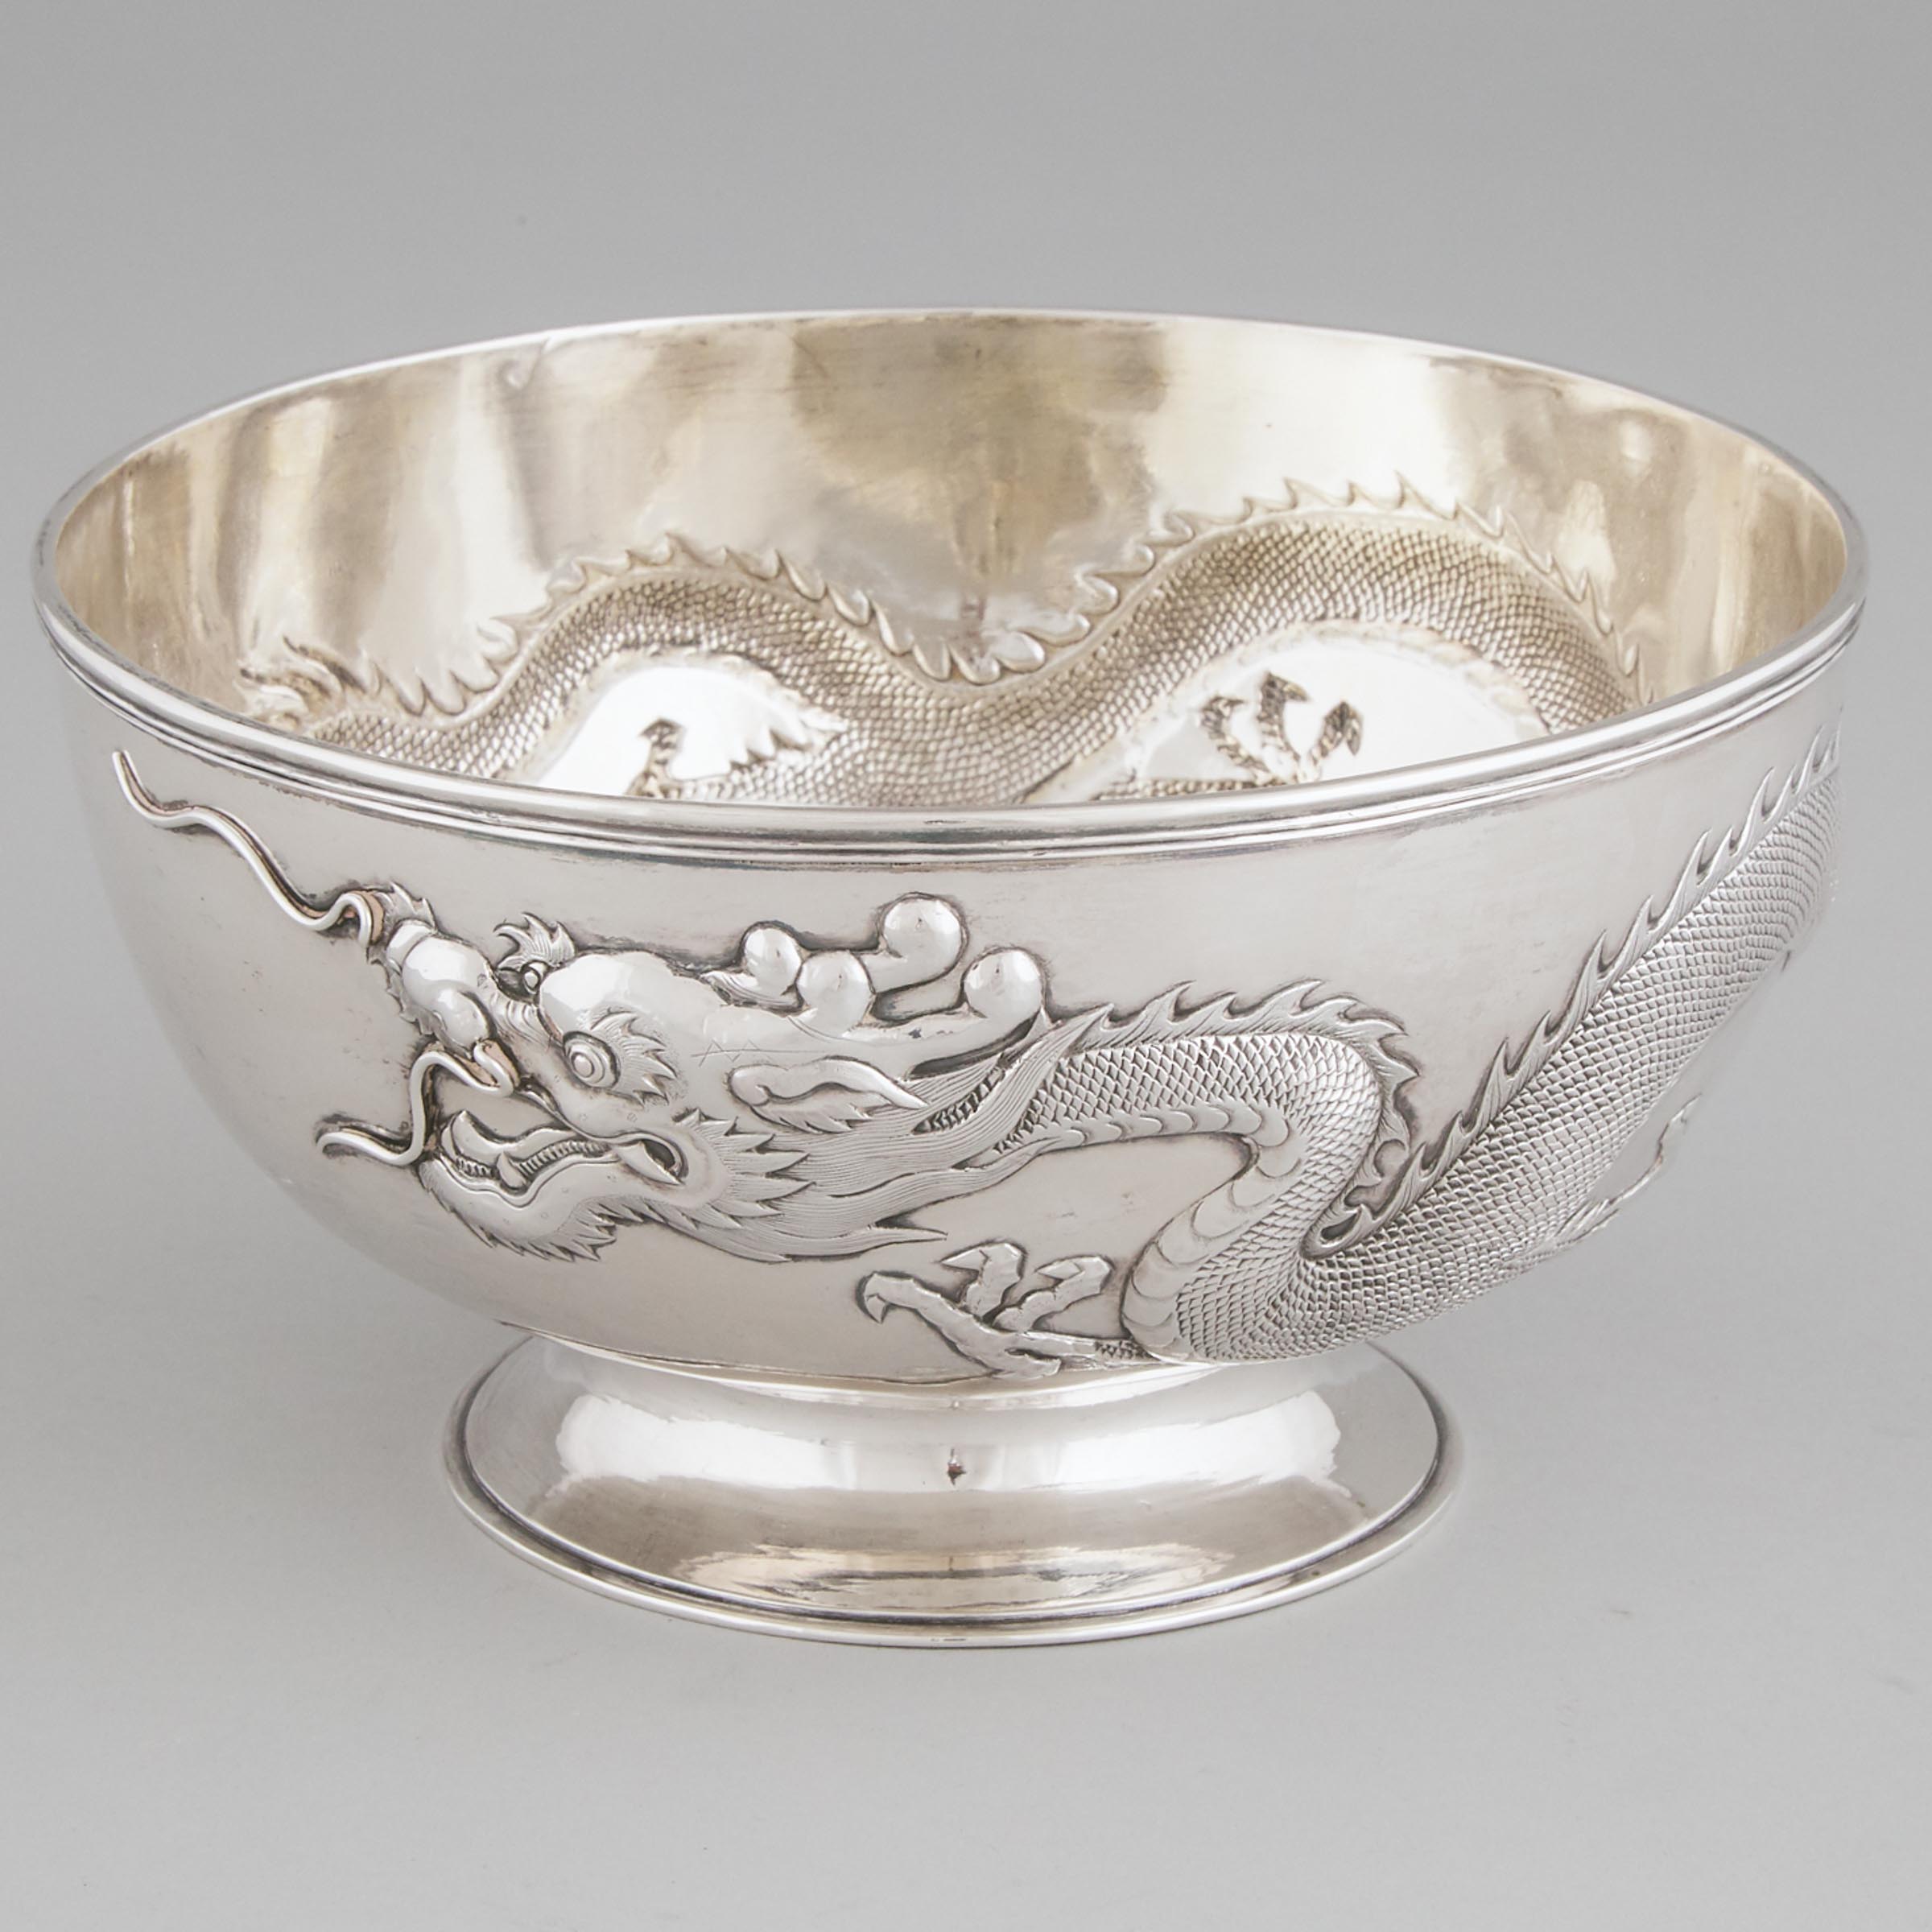 Chinese Export Silver Footed Bowl, Kwong Man Shing, Hong Kong and possibly Canton, early 20th century